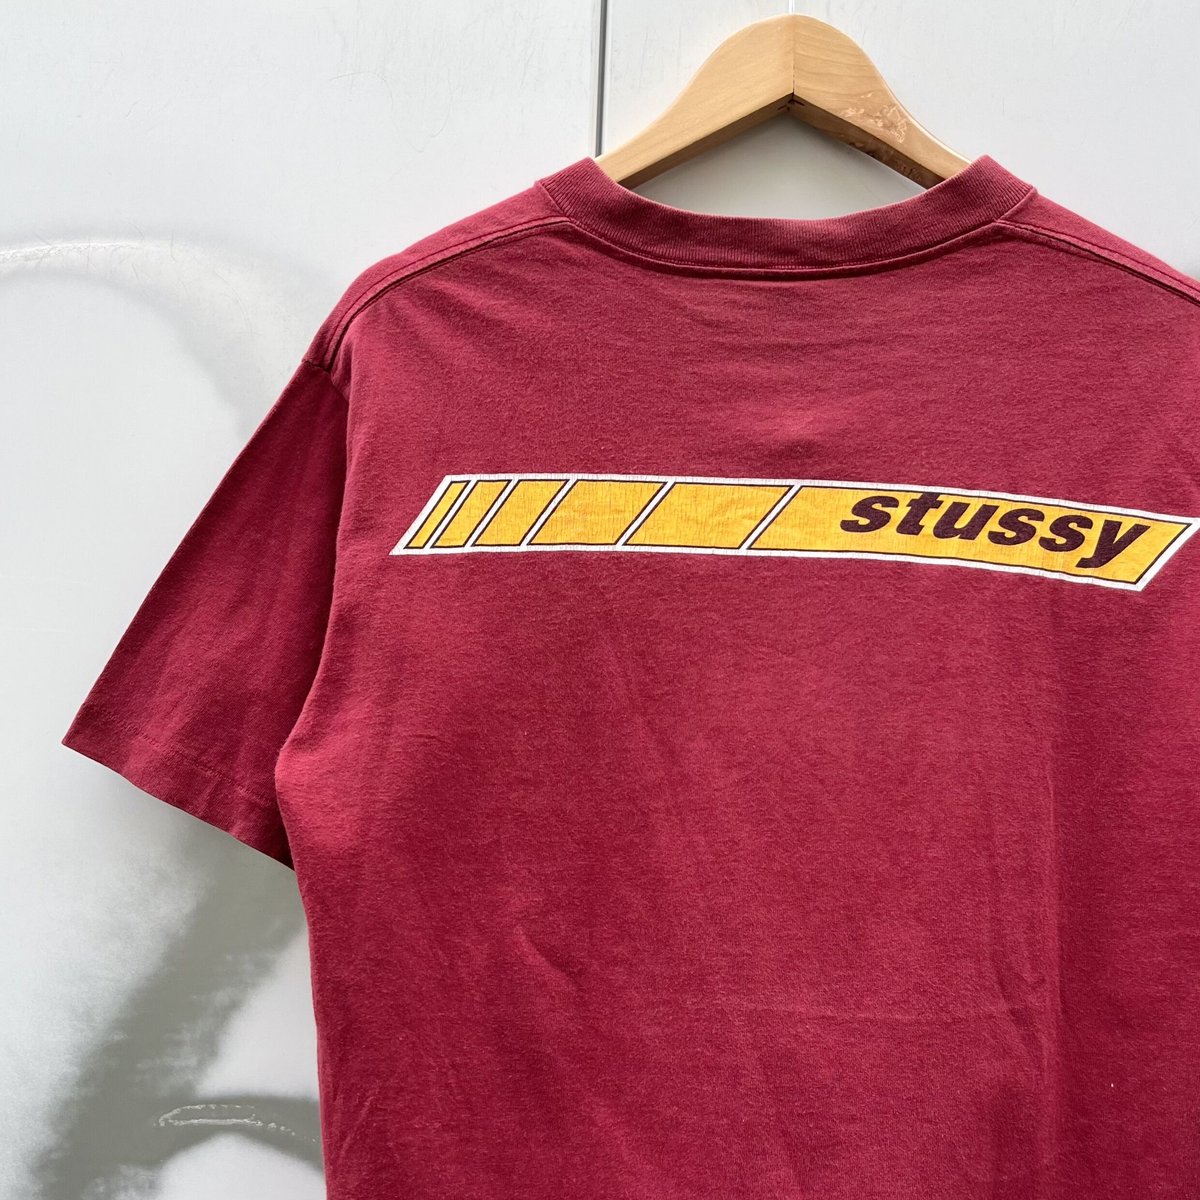 Stussy(ステューシー) AUTHENTICタグ シームデザインシャツ